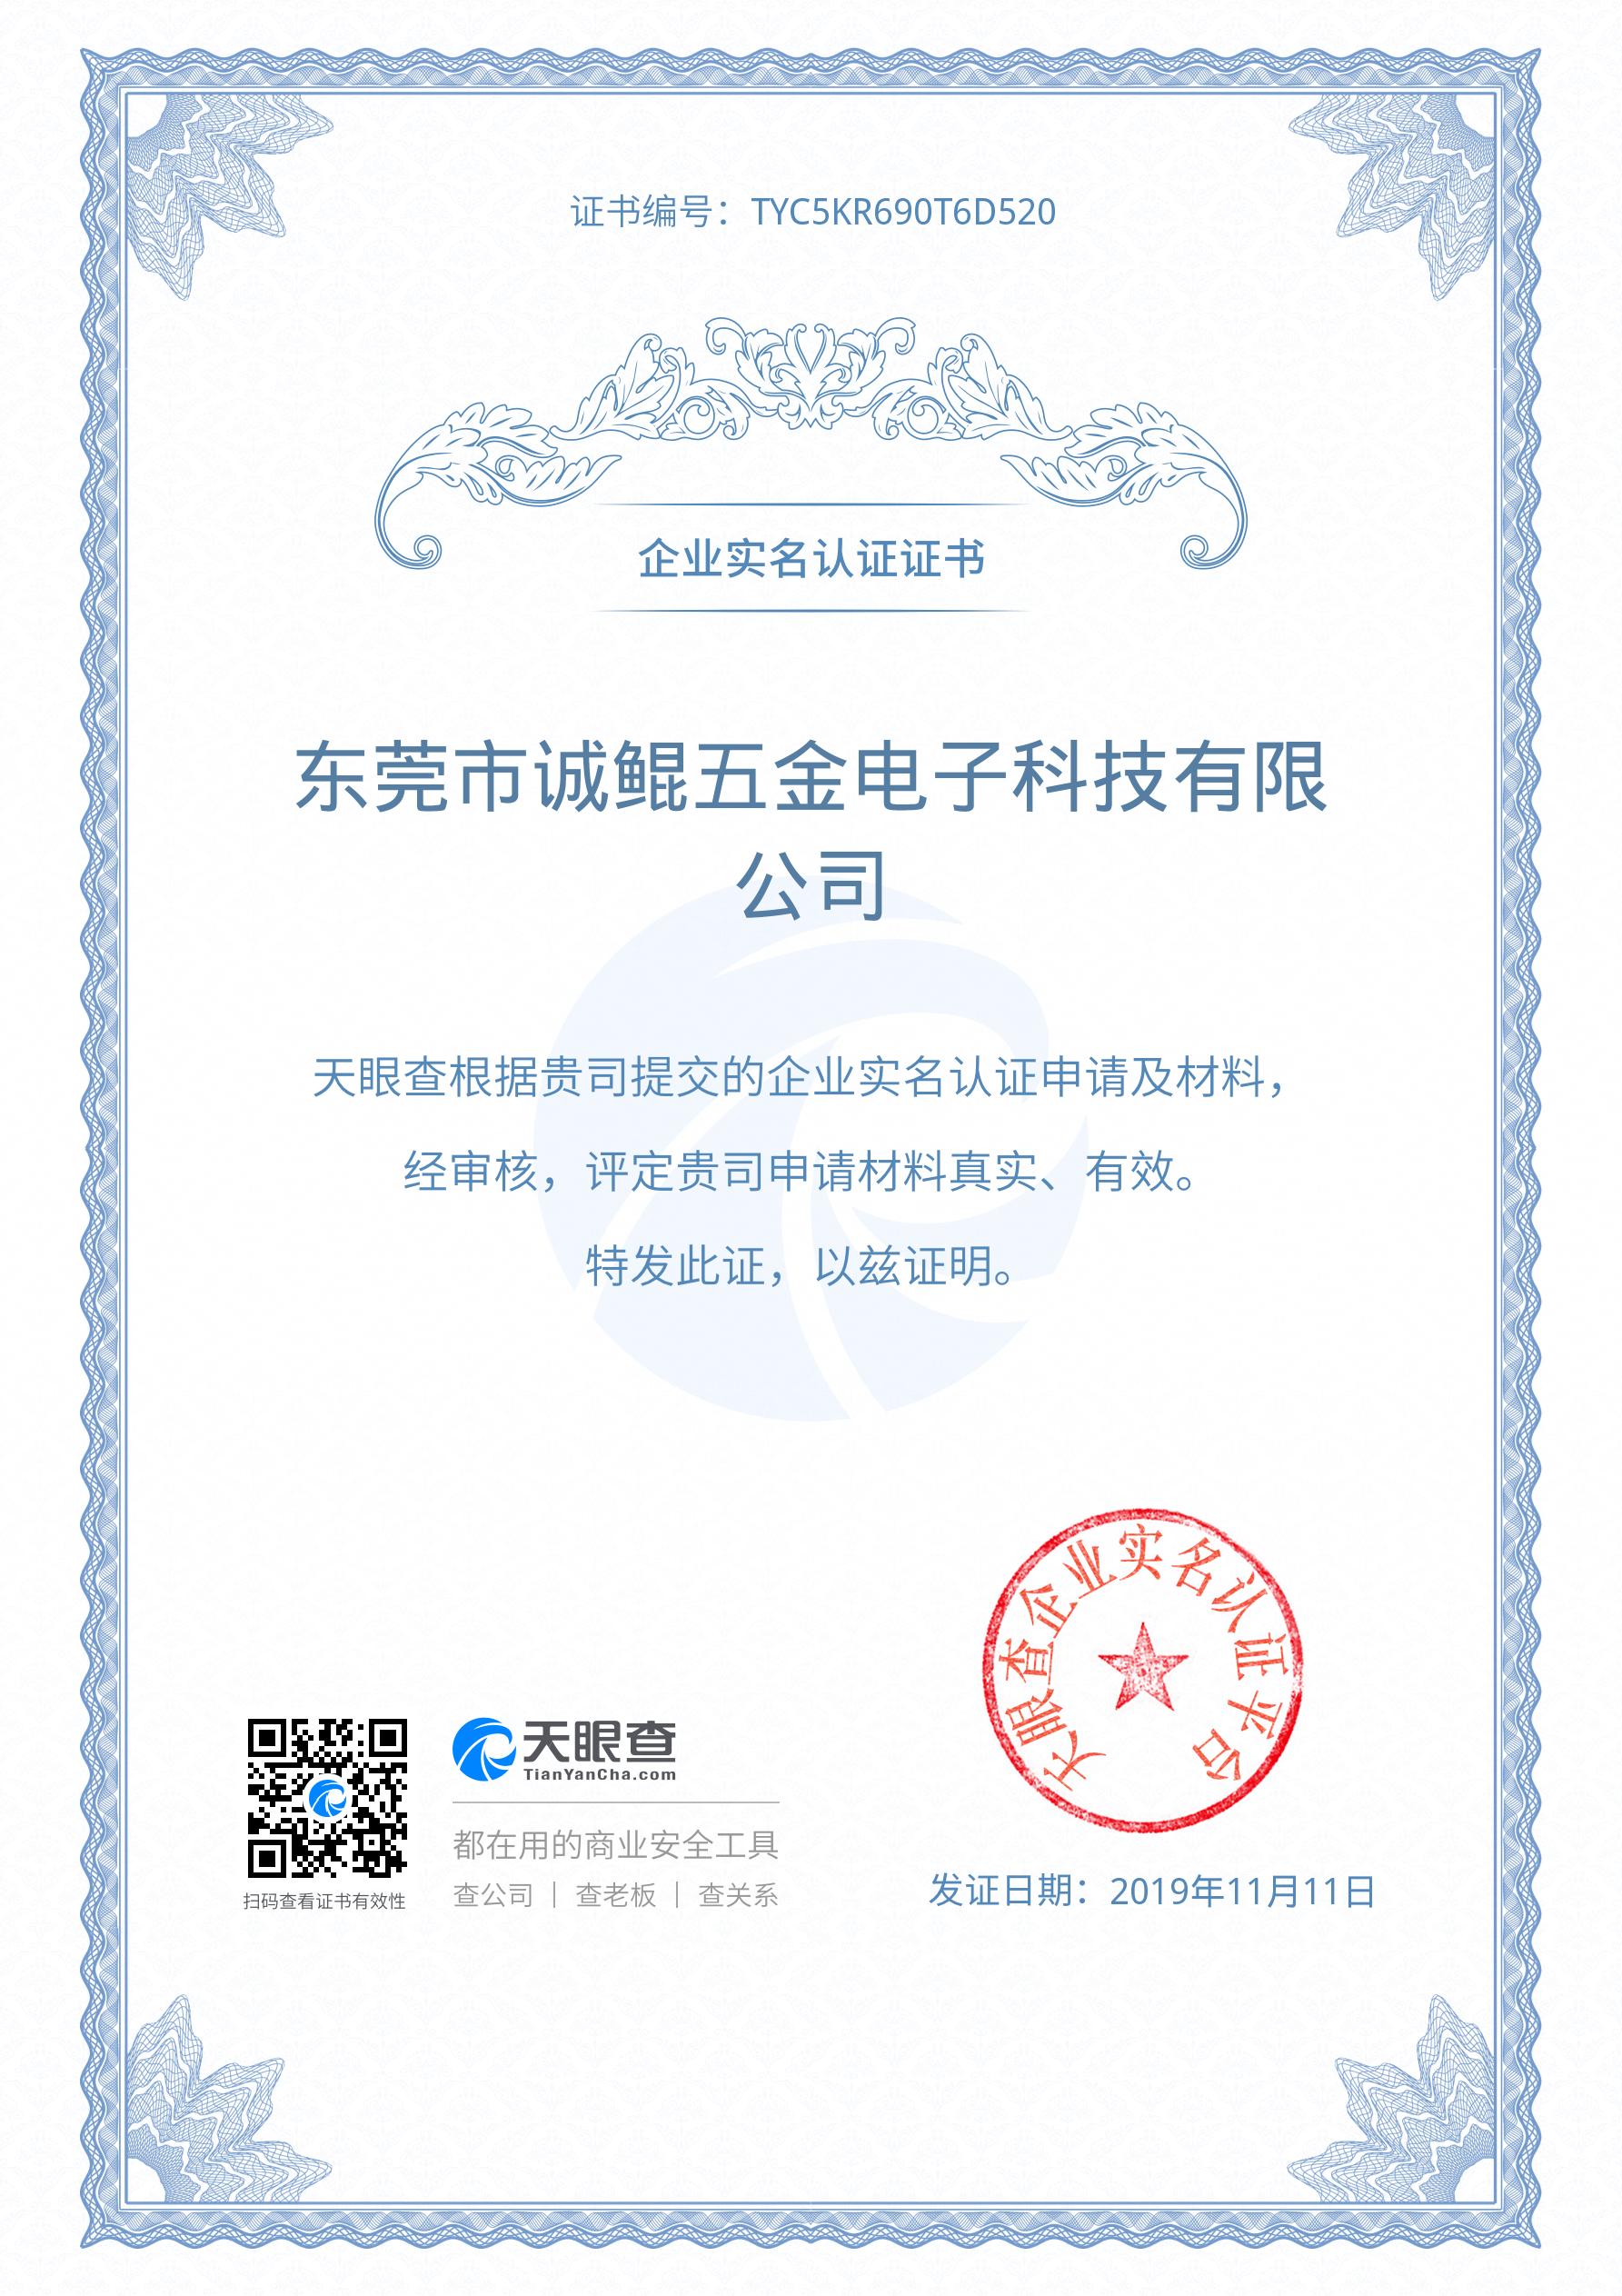 Tianyan check certification